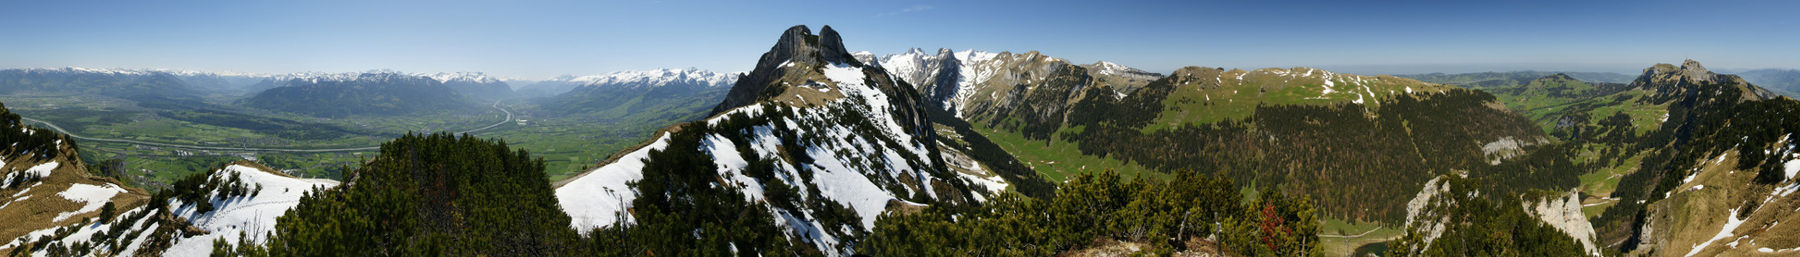 Graubünden banner.jpg